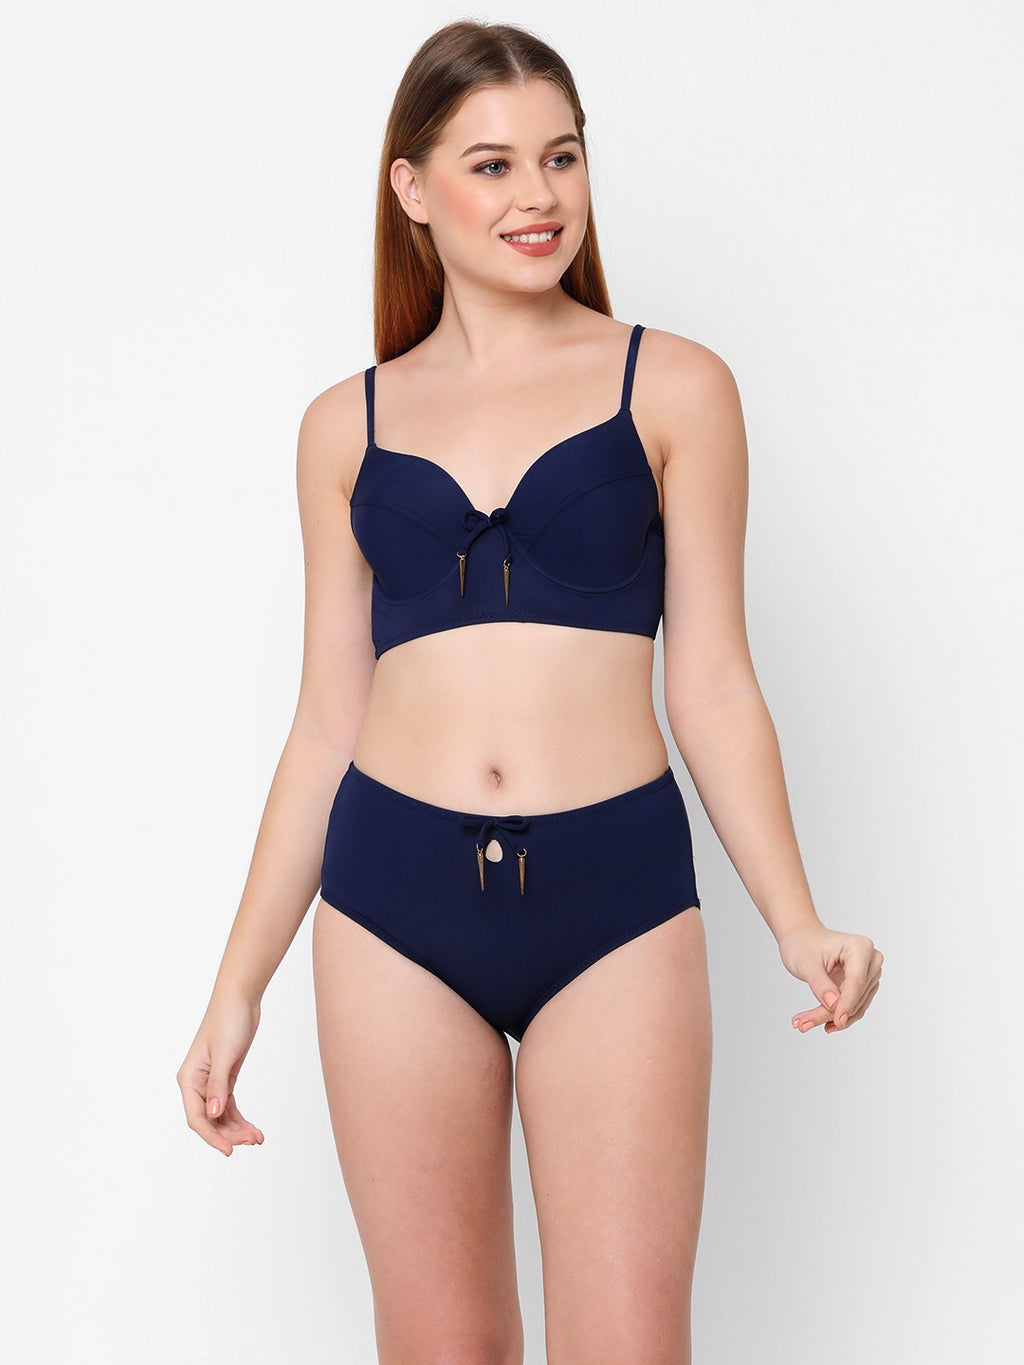 Esha Lal Swimwear dark blue two piece women's bikini set 